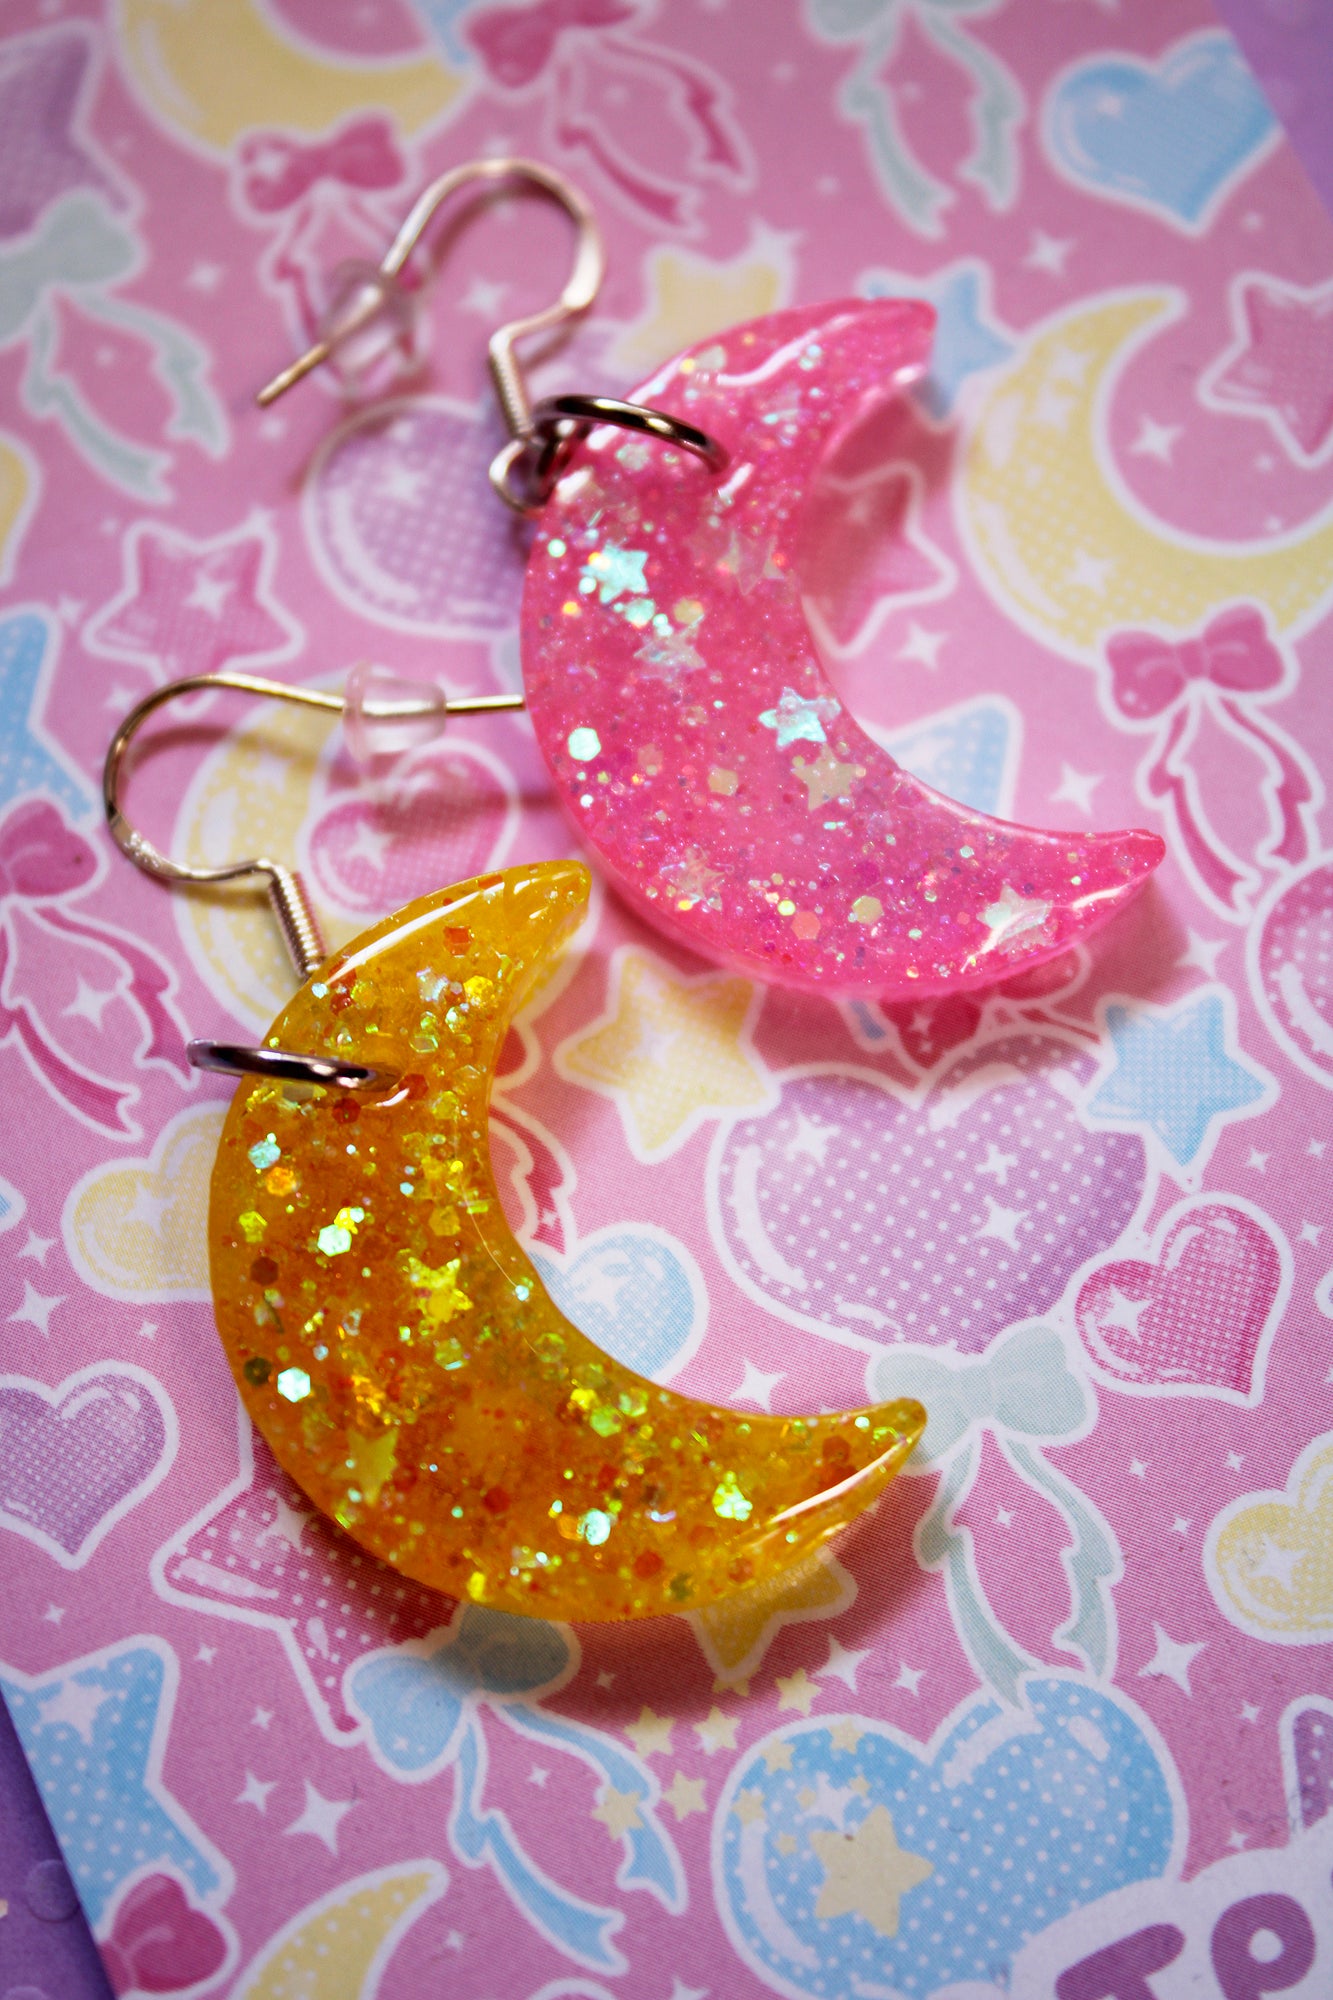 Magical Moon Earrings (Pink x Yellow)